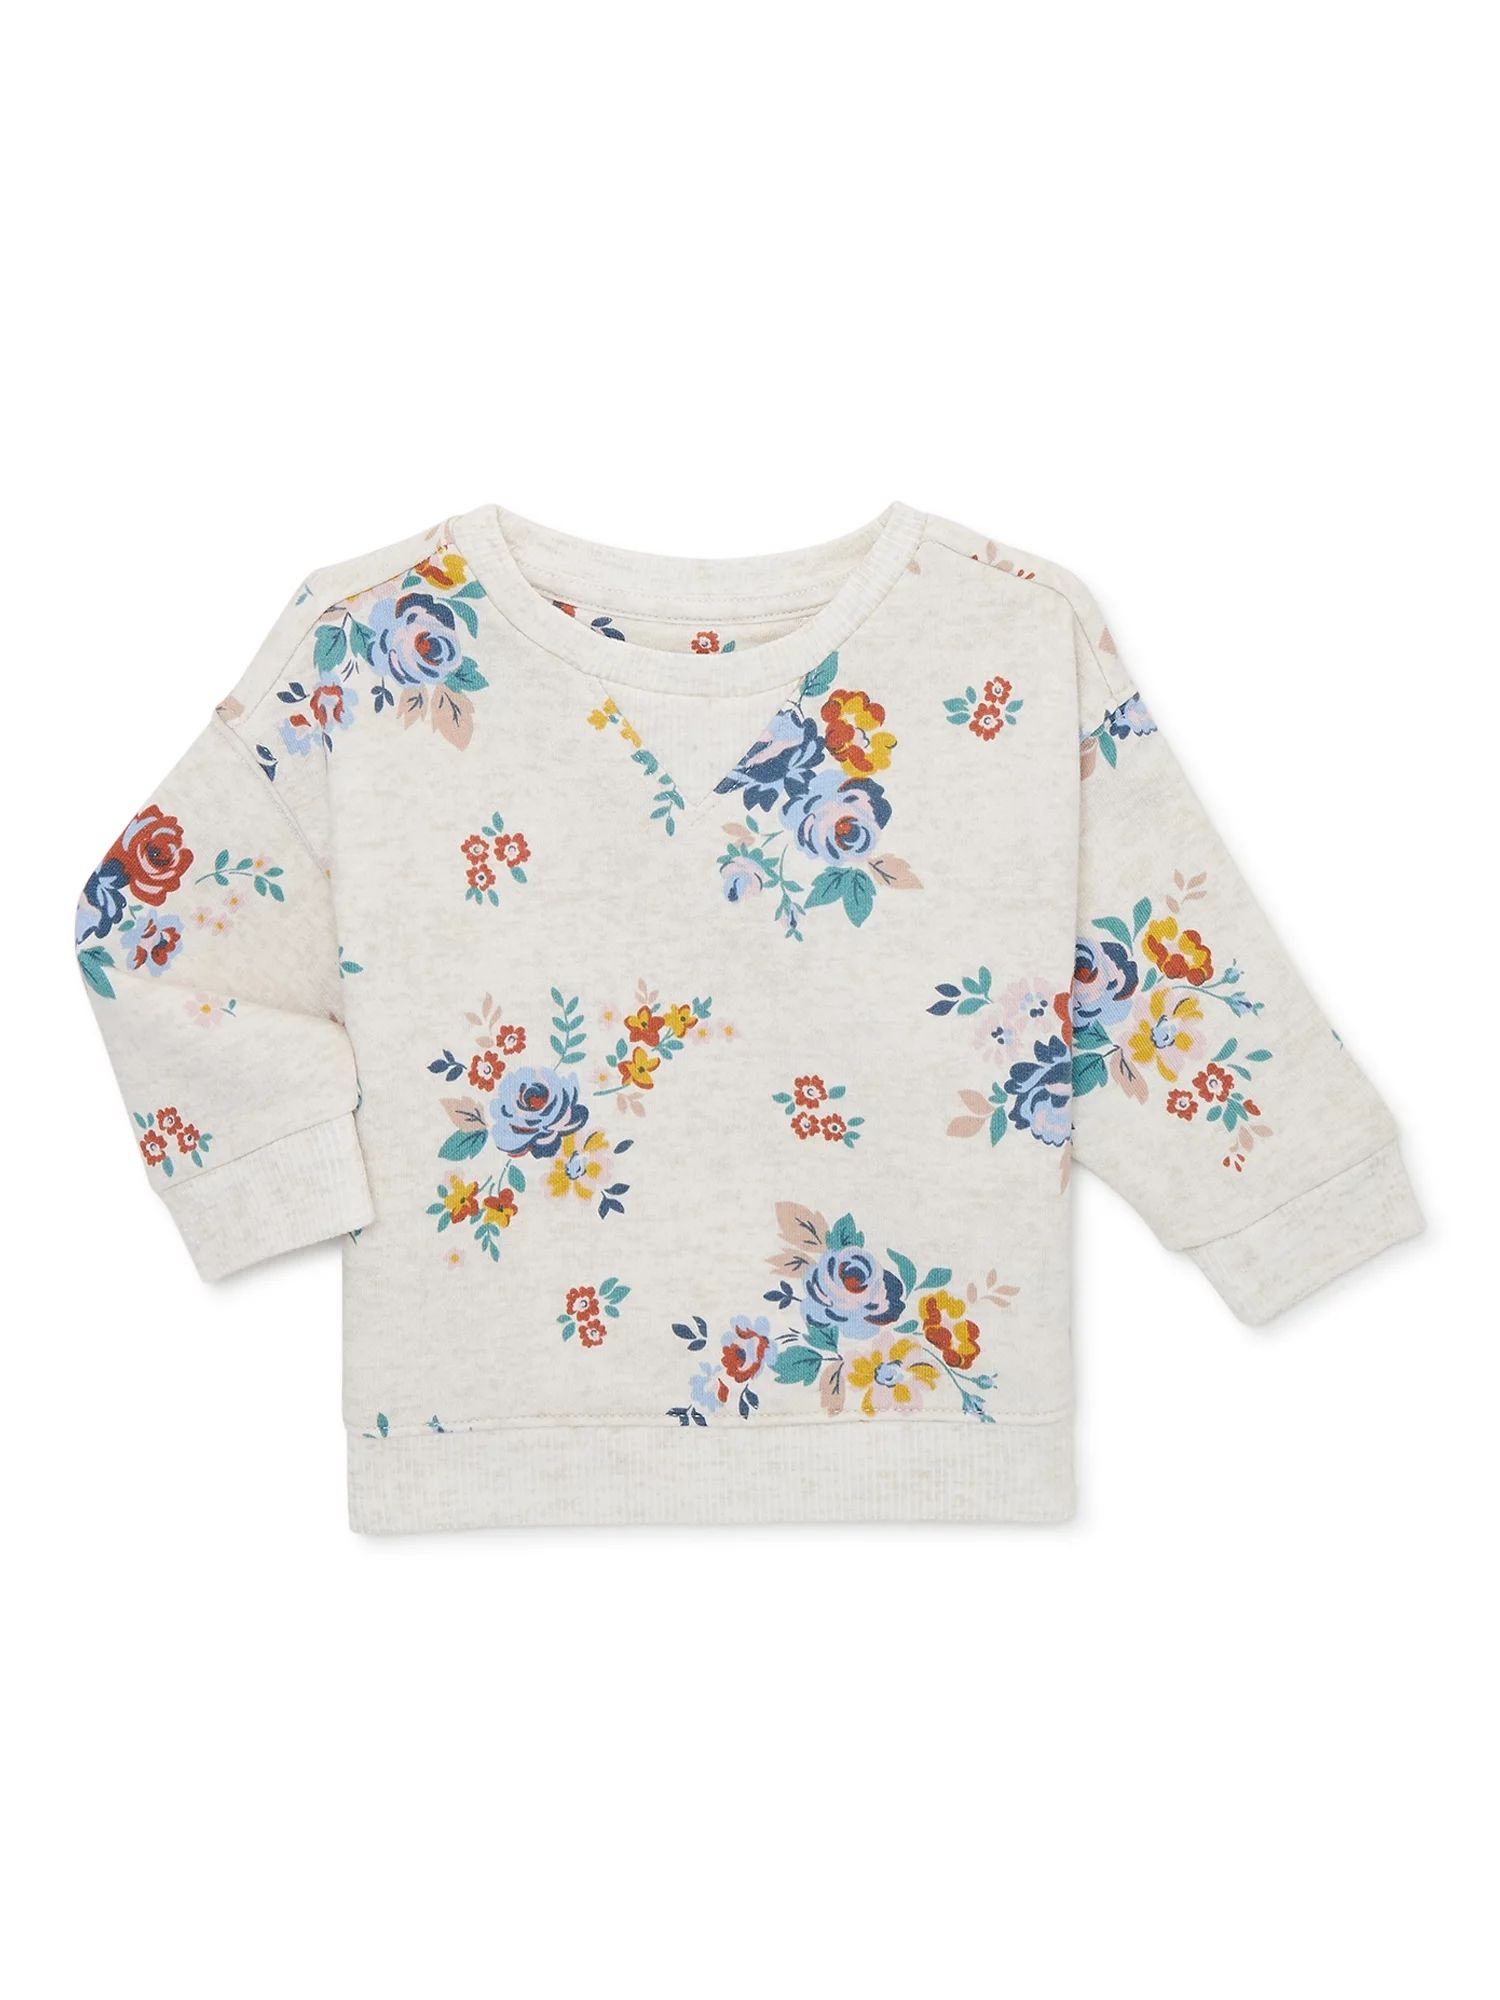 easy-peasy Baby Print French Terry Crew Sweatshirt, Sizes 0/3-24 Months | Walmart (US)